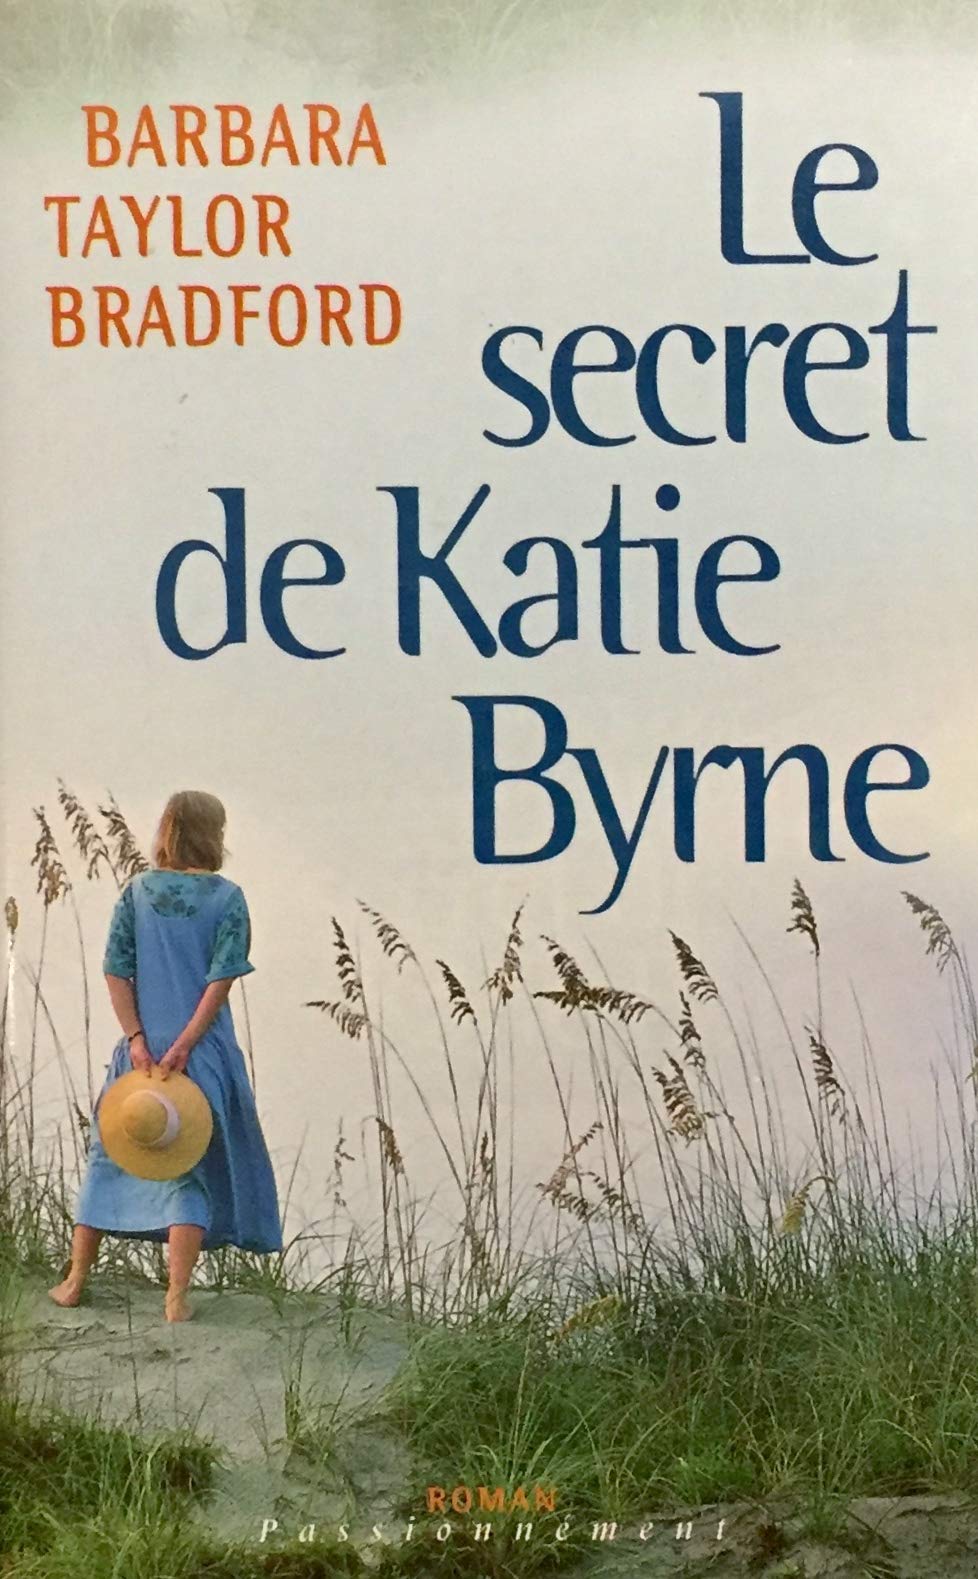 Livre ISBN 2744160768 Le secret de Katie Byrne (Barbara Taylor Bradford)